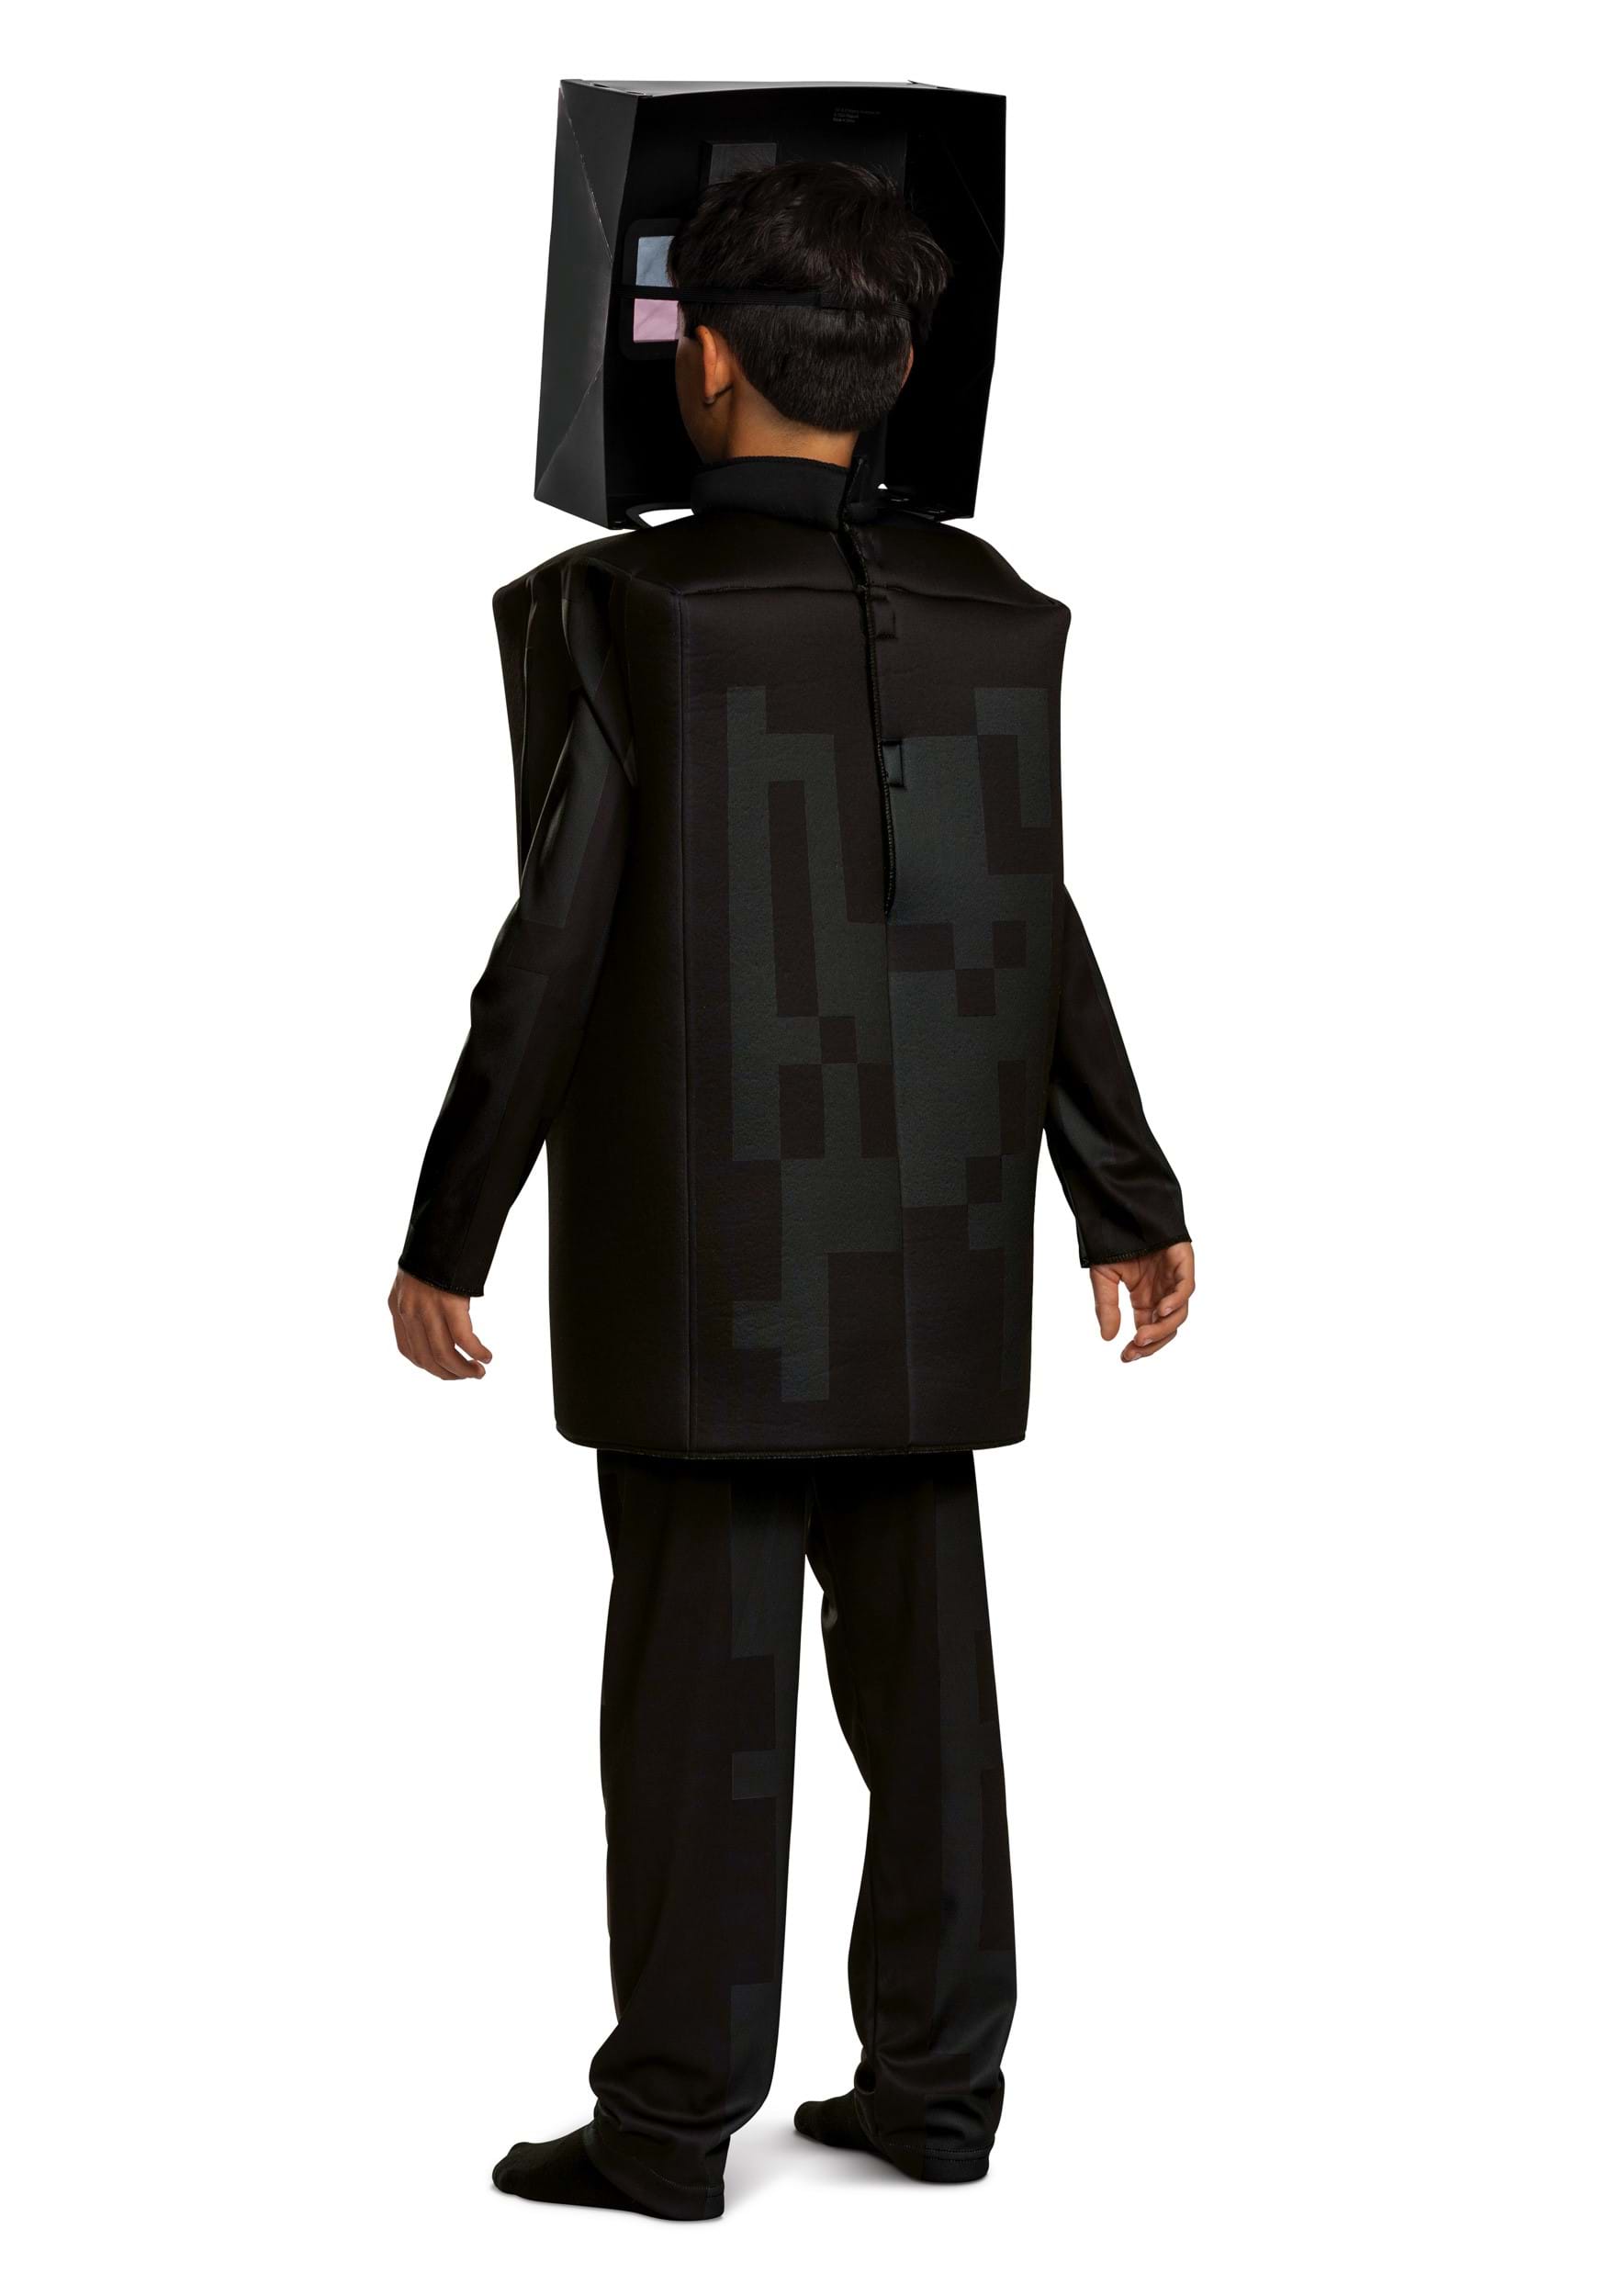 Minecraft Enchanted Diamond Armor Deluxe Kid's Costume 